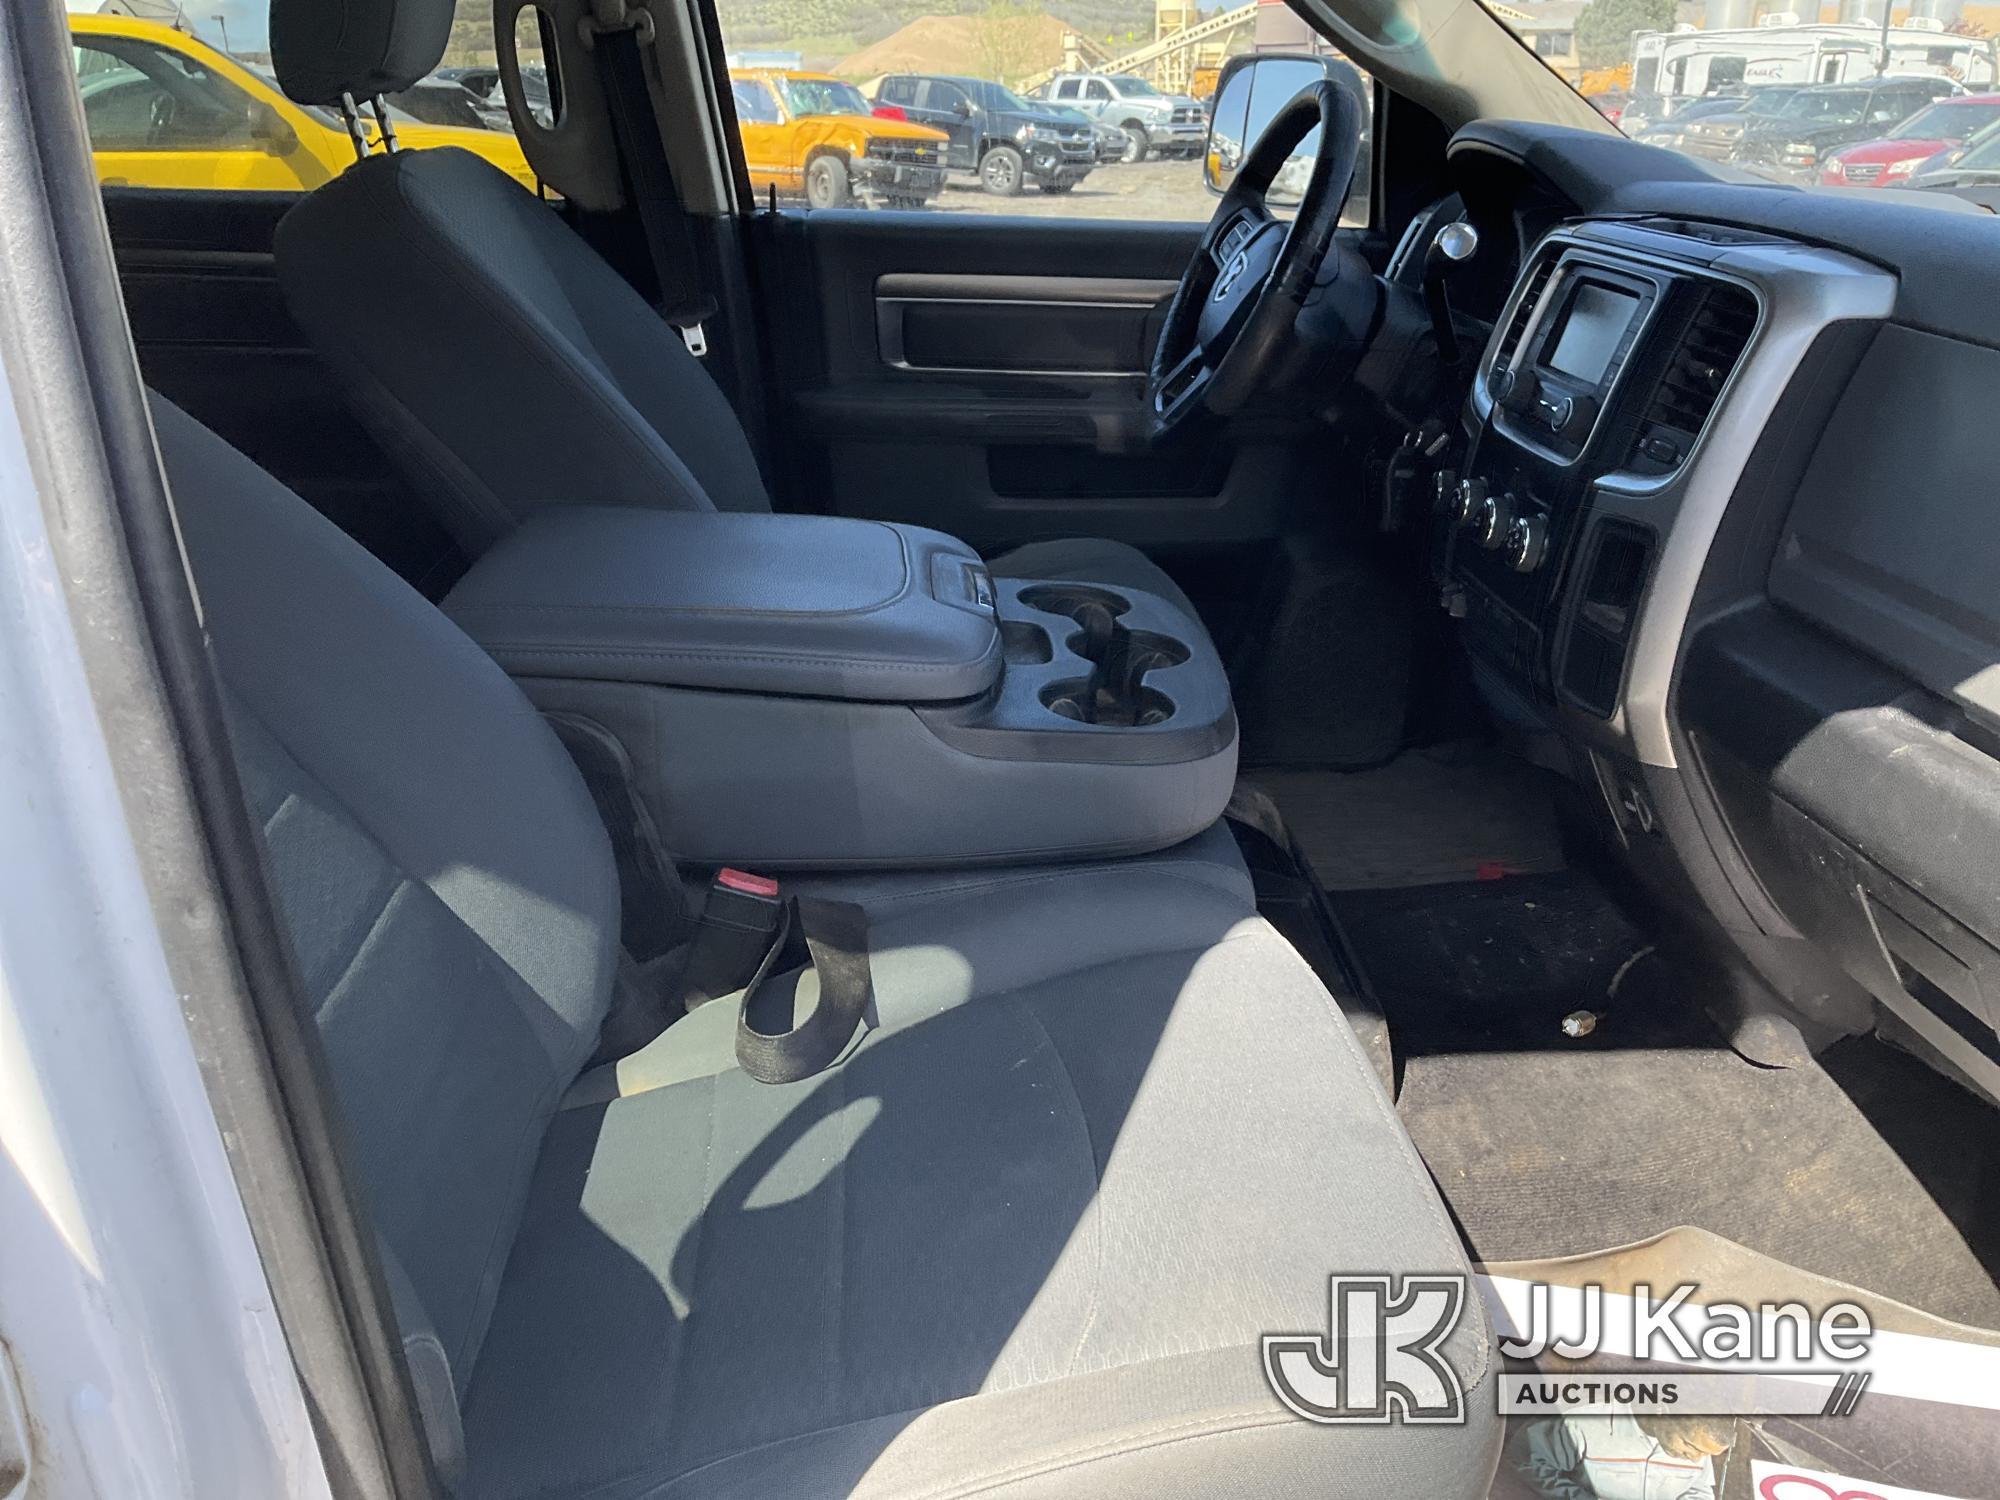 (Castle Rock, CO) 2017 RAM 3500 4x4 Crew-Cab Pickup Truck Runs & Moves)